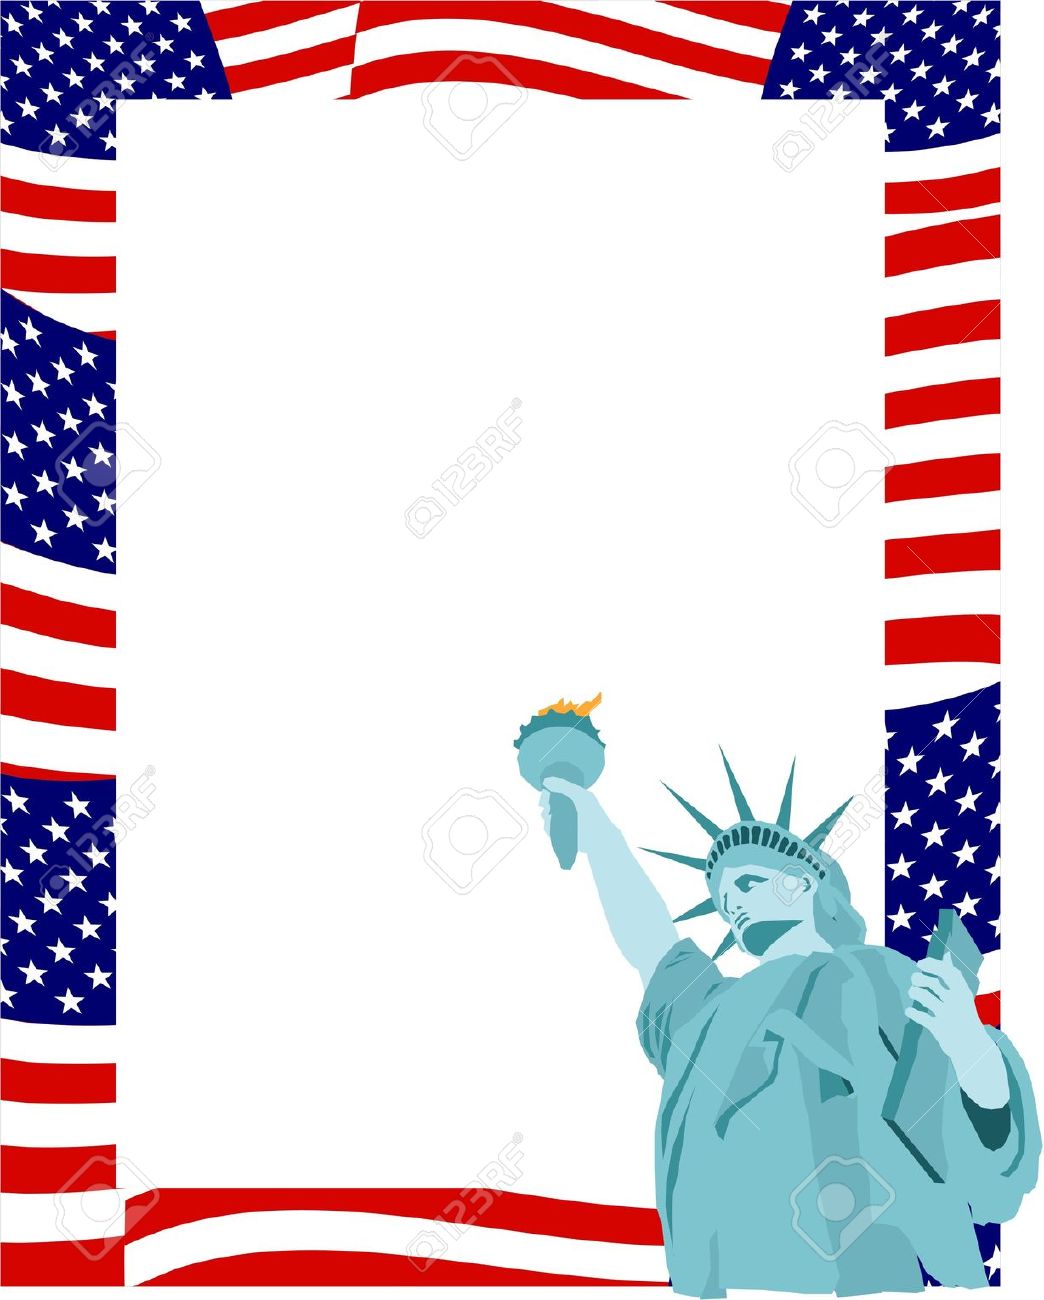 clipart american flag border - photo #37